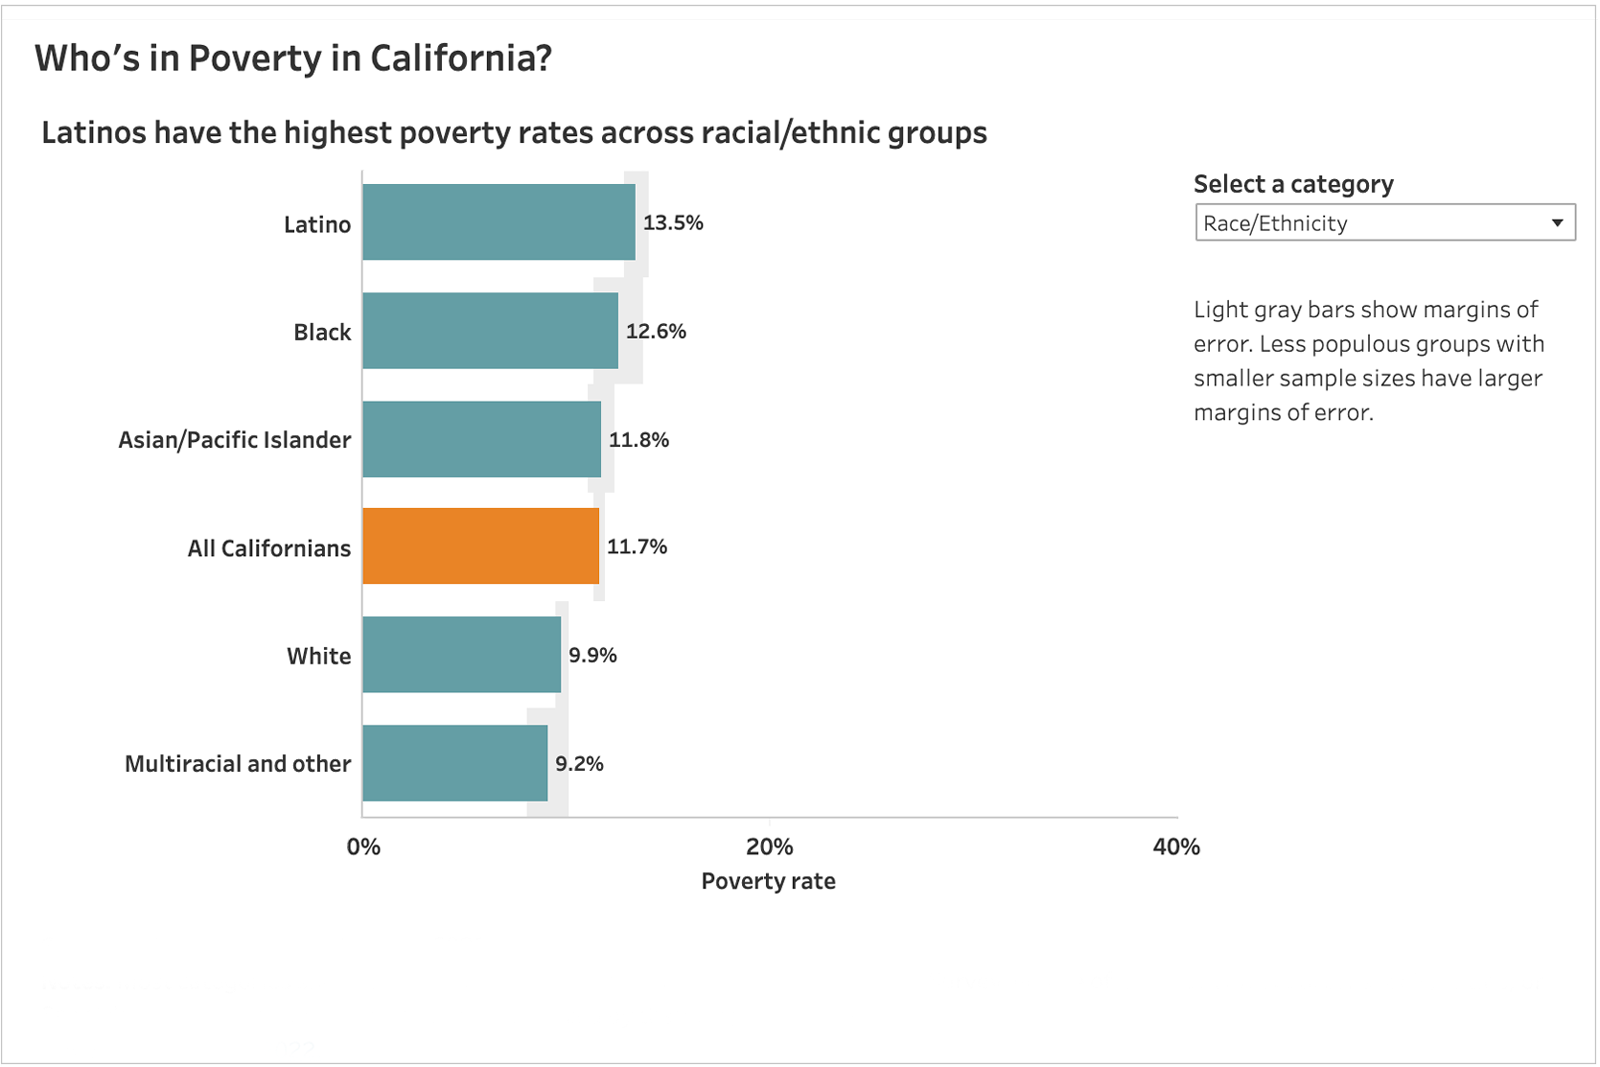 Who's in Poverty in California? Public Policy Institute of California